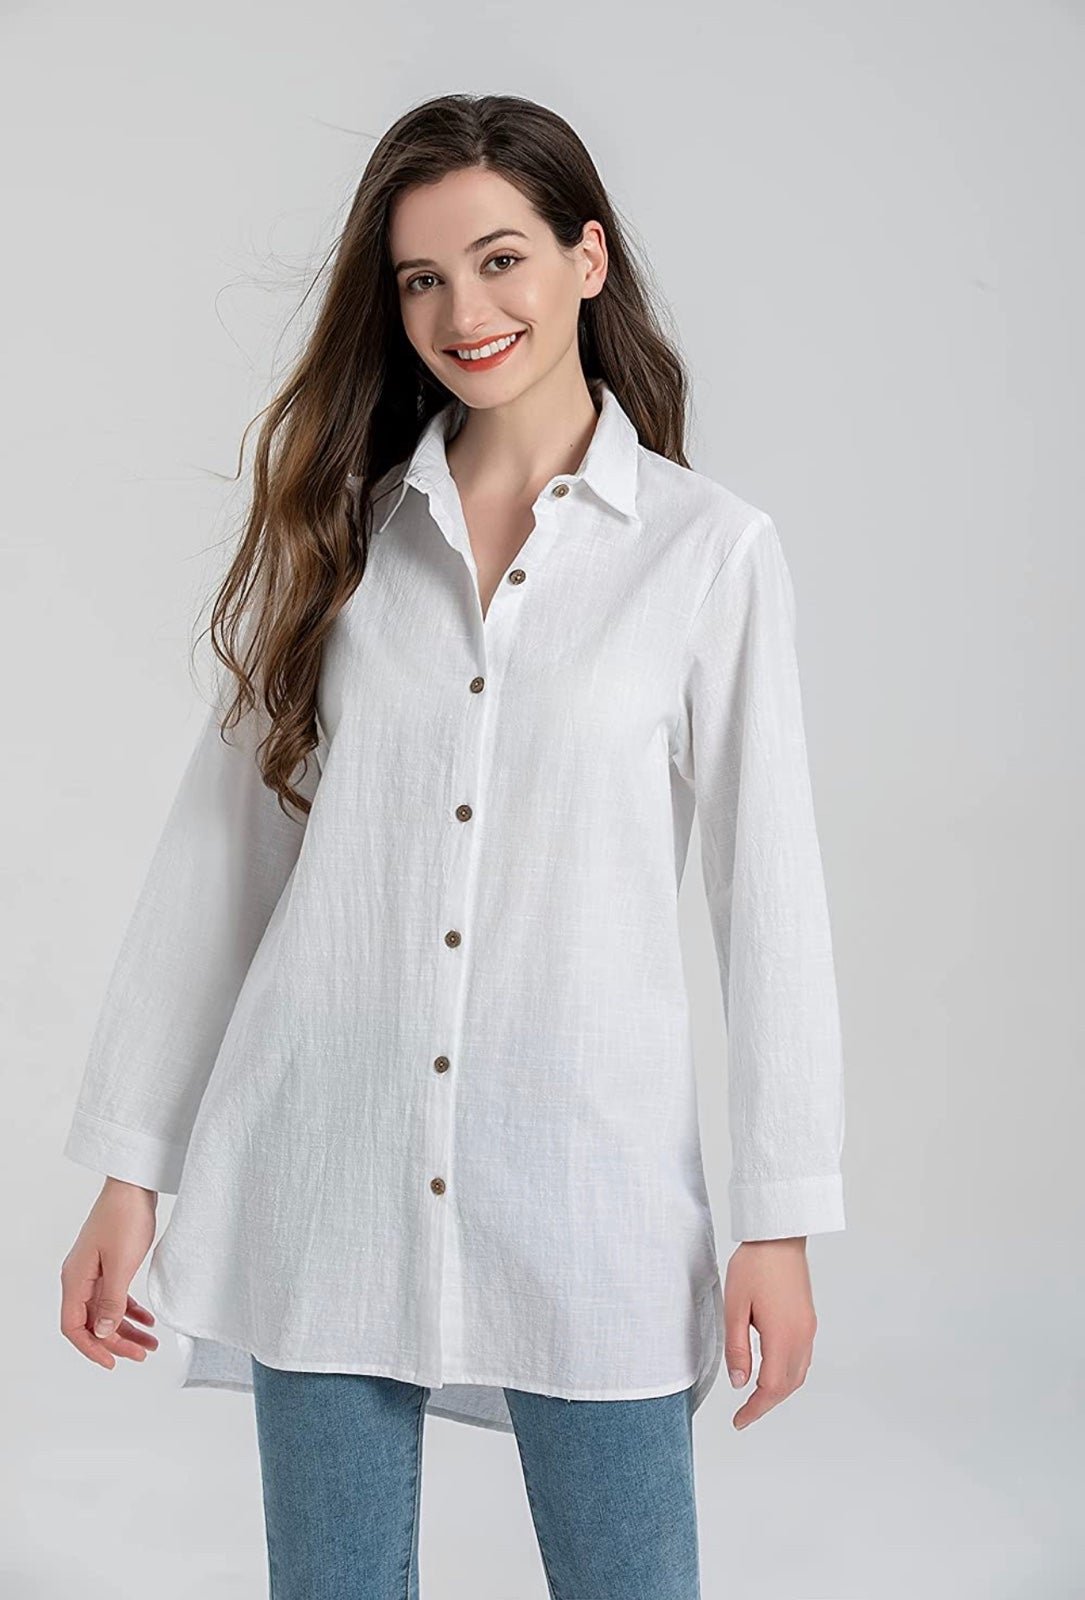 Elegant Women´s Long Sleeve Shirts Button Down Blouse Cotton Tunic High Low Tops OJUjetK3J Outlet Store